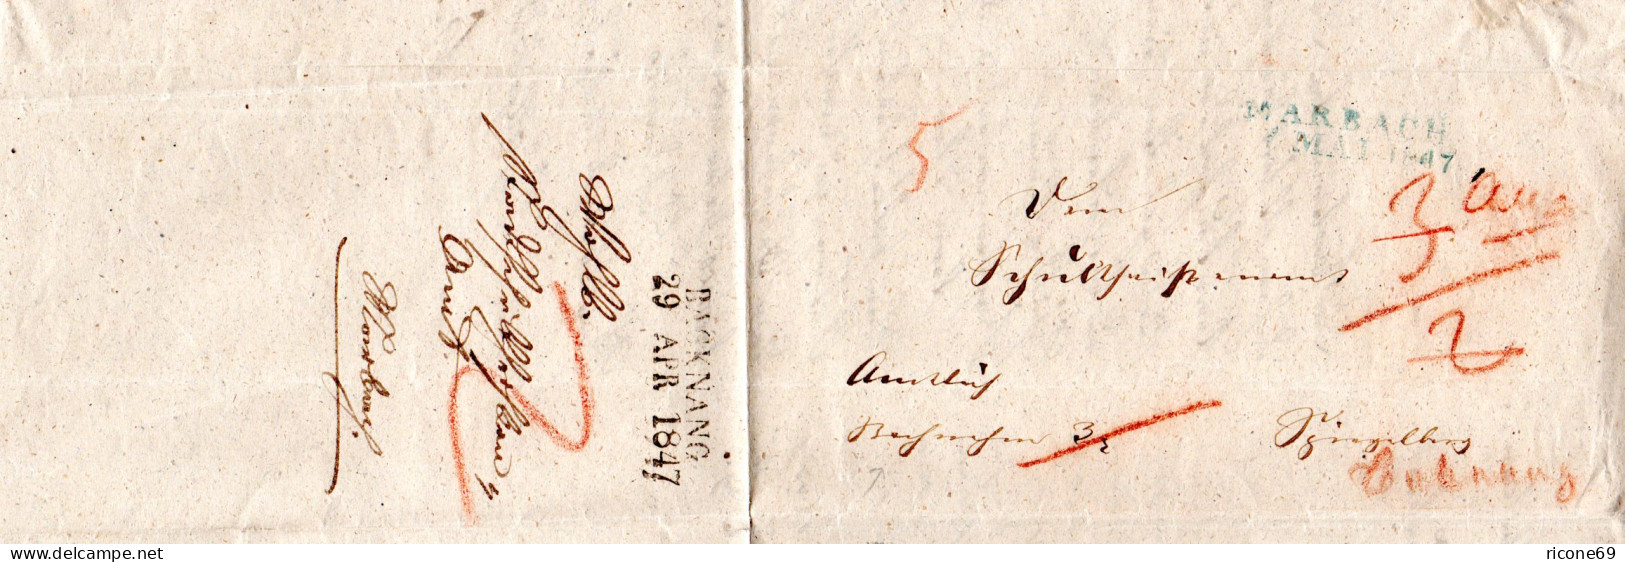 Württemberg 1847, L2 BACKNANG U. MARBACH Auf 2mal Verwendetem Brief, 1xNachnahme - Prephilately